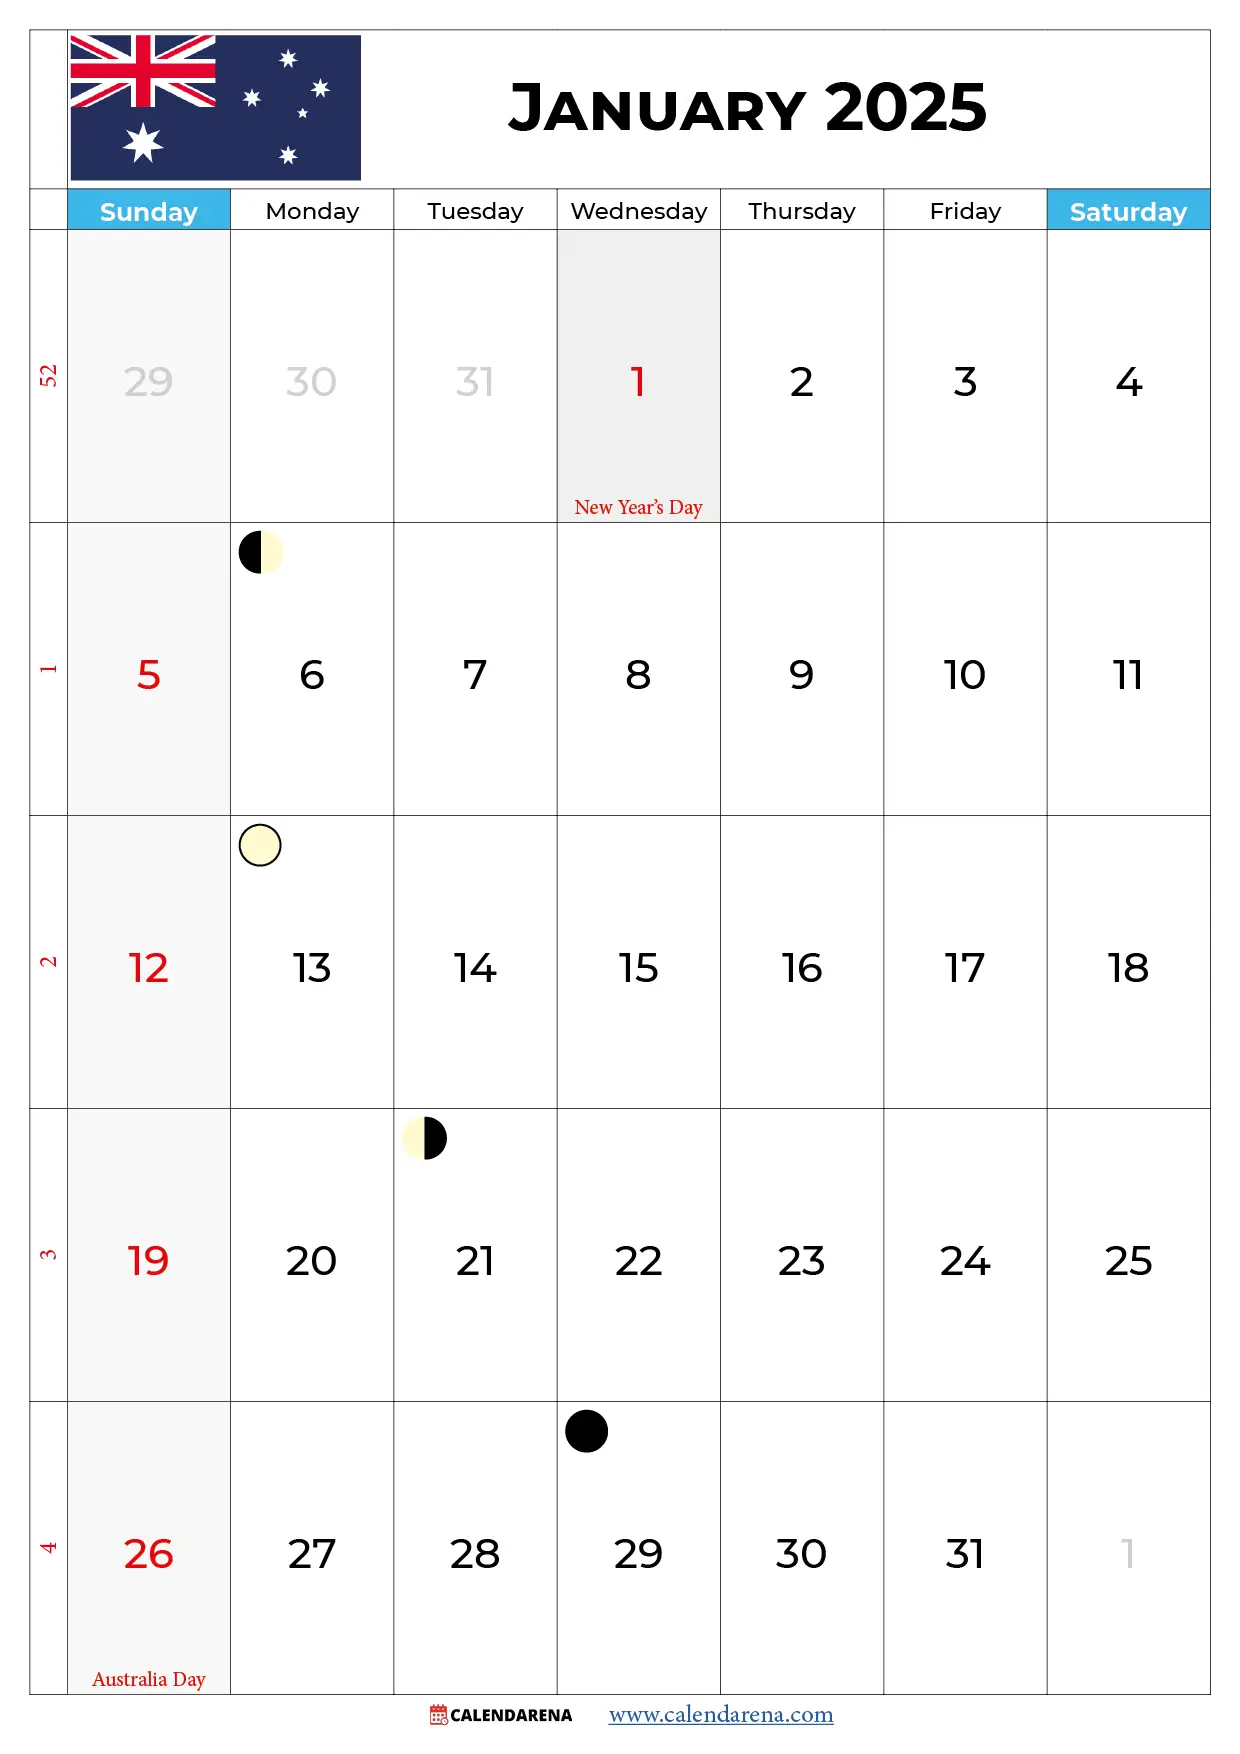 calendar january 2025 australia